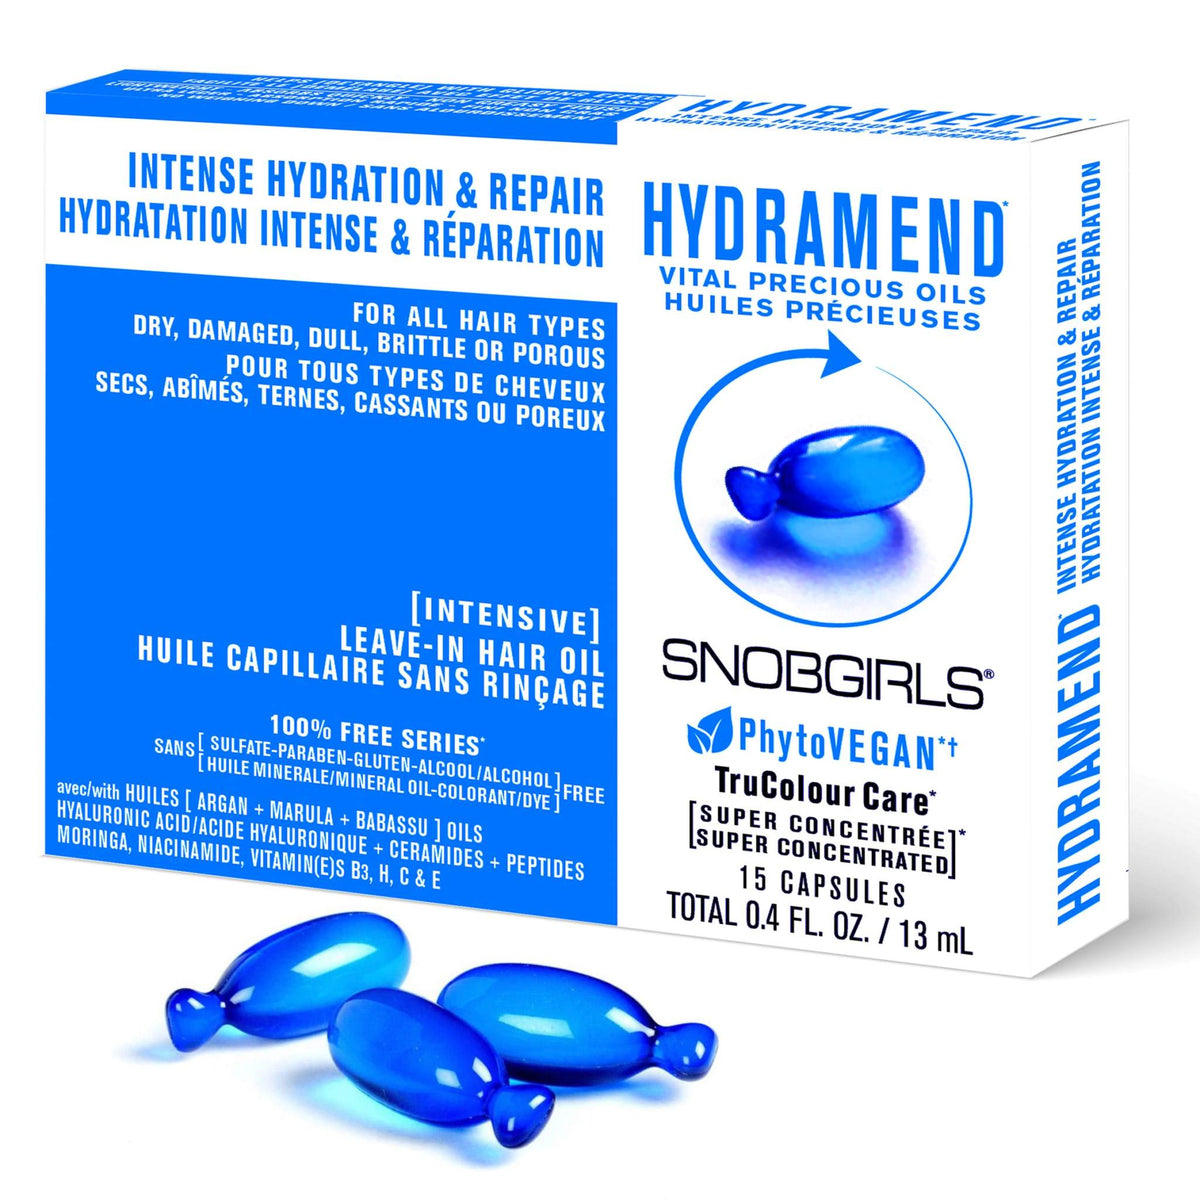 HYDRAMEND Huile Capillaire avec Huiles d&#39;Argan, Acide Hyaluronique, Céramides, Peptides &amp; Vitamines